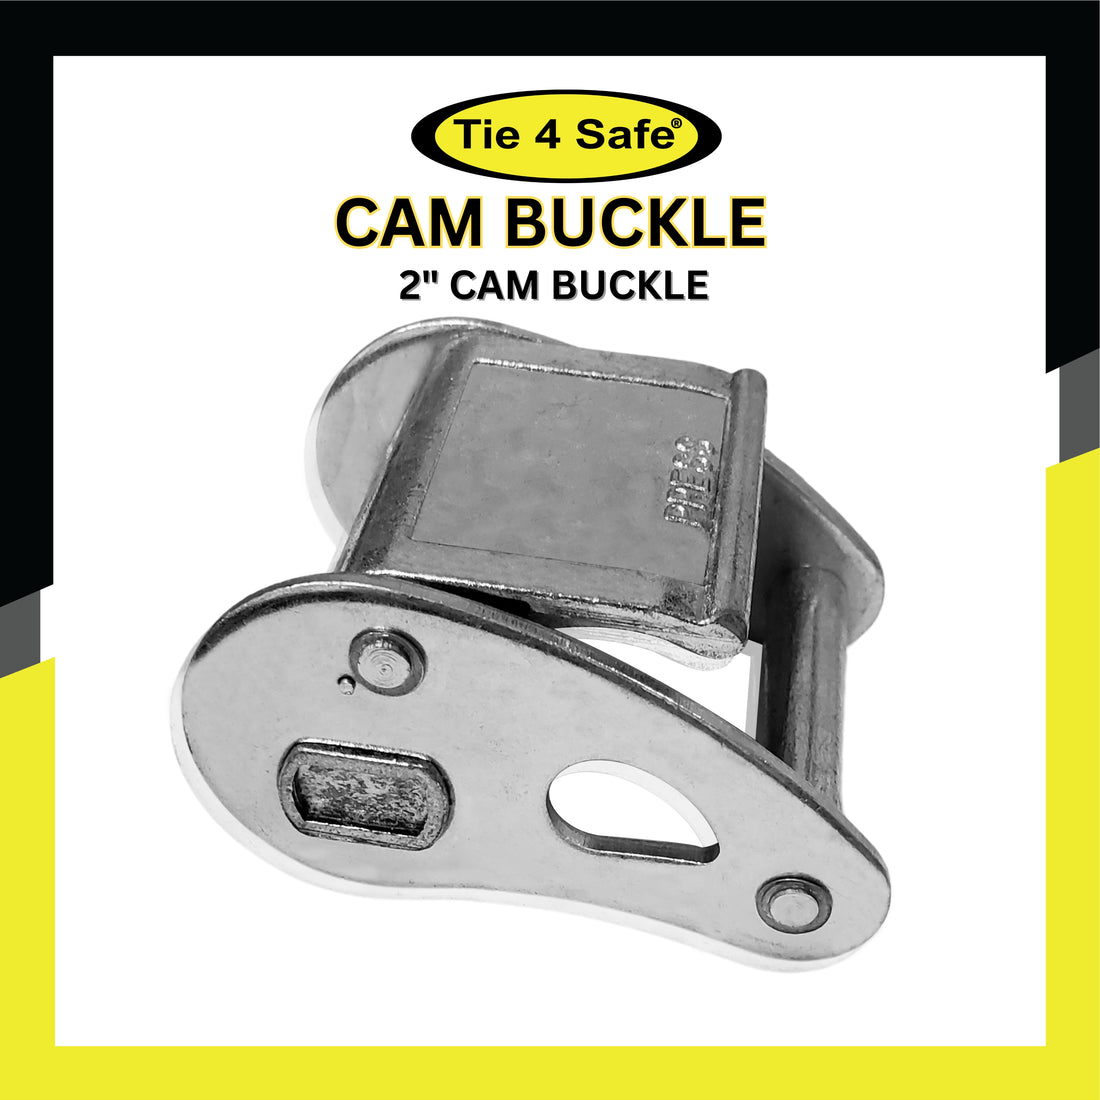 2" Cam Buckle - CB09-122